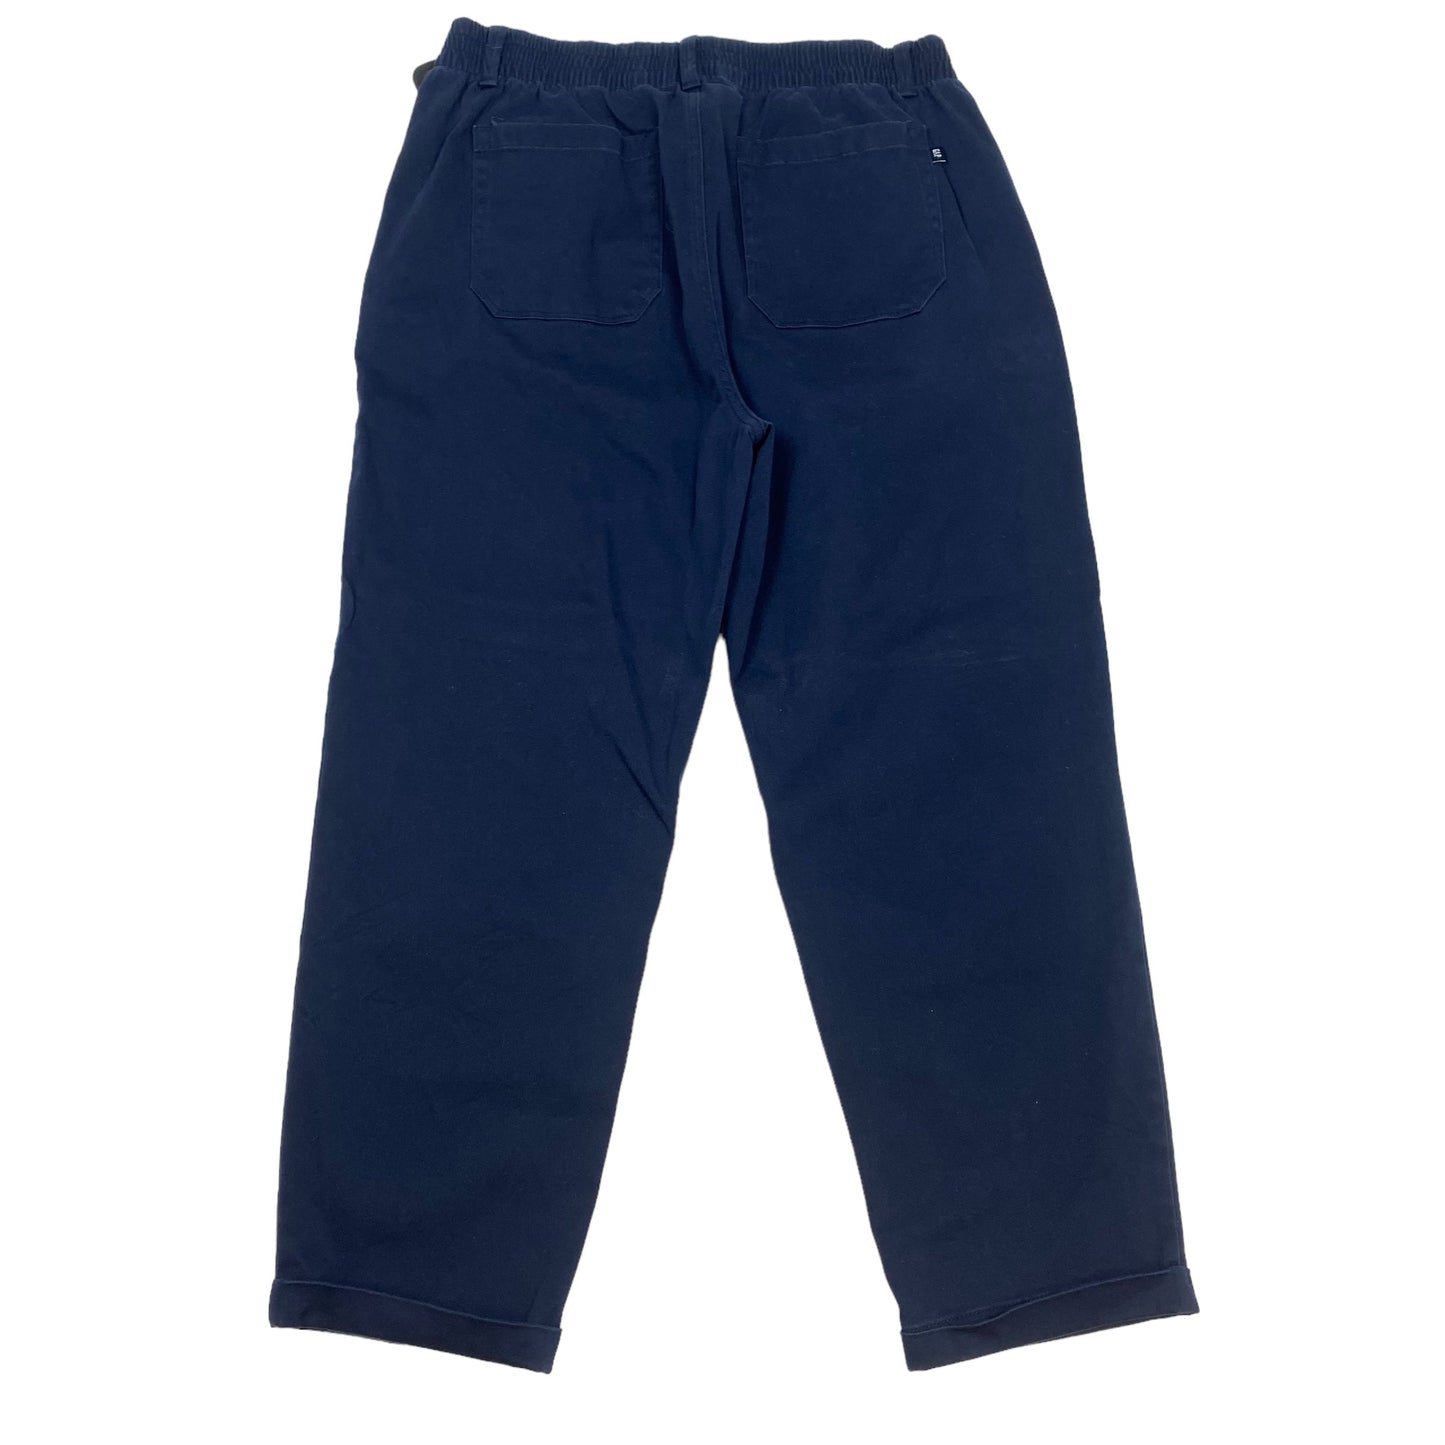 Navy Pants Chinos & Khakis Gap, Size 14